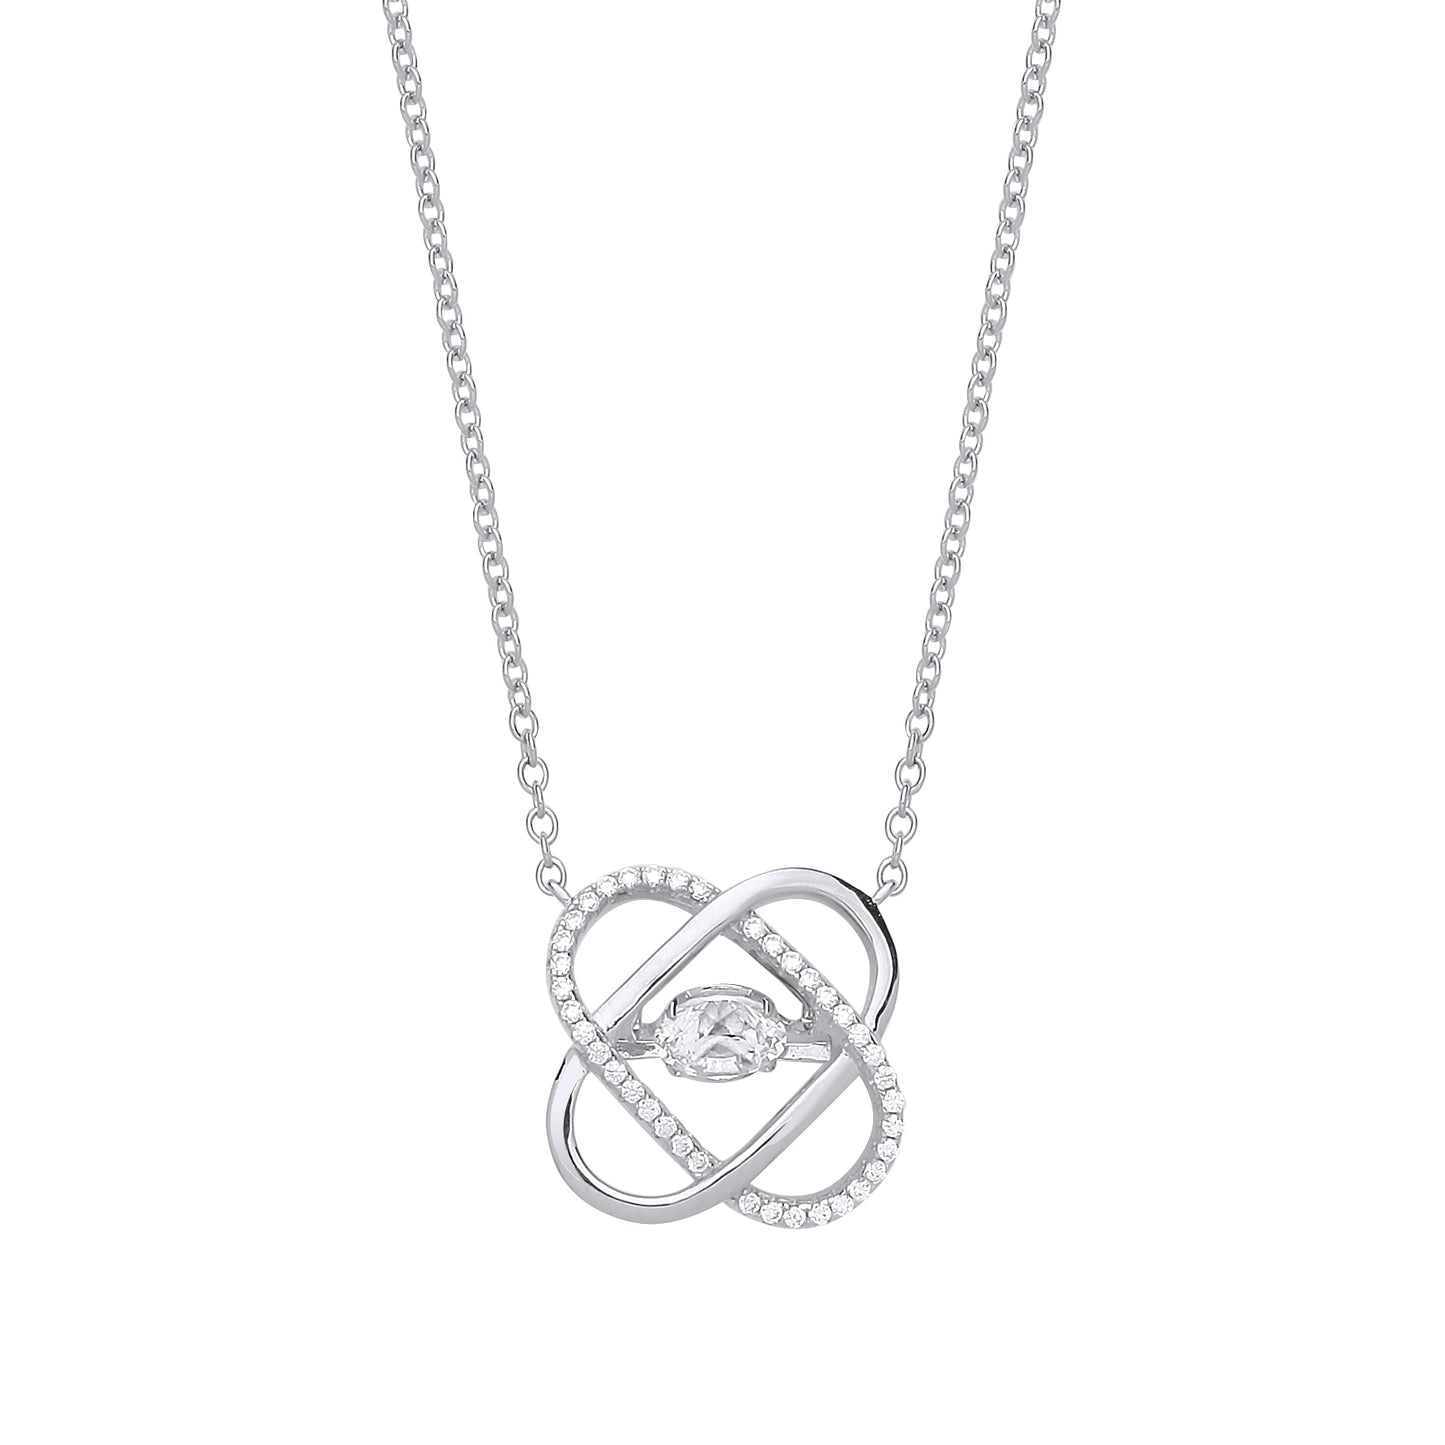 Silver  CZ Love Heart Atom Celtic Knot Charm Necklace 18 inch - GVK266